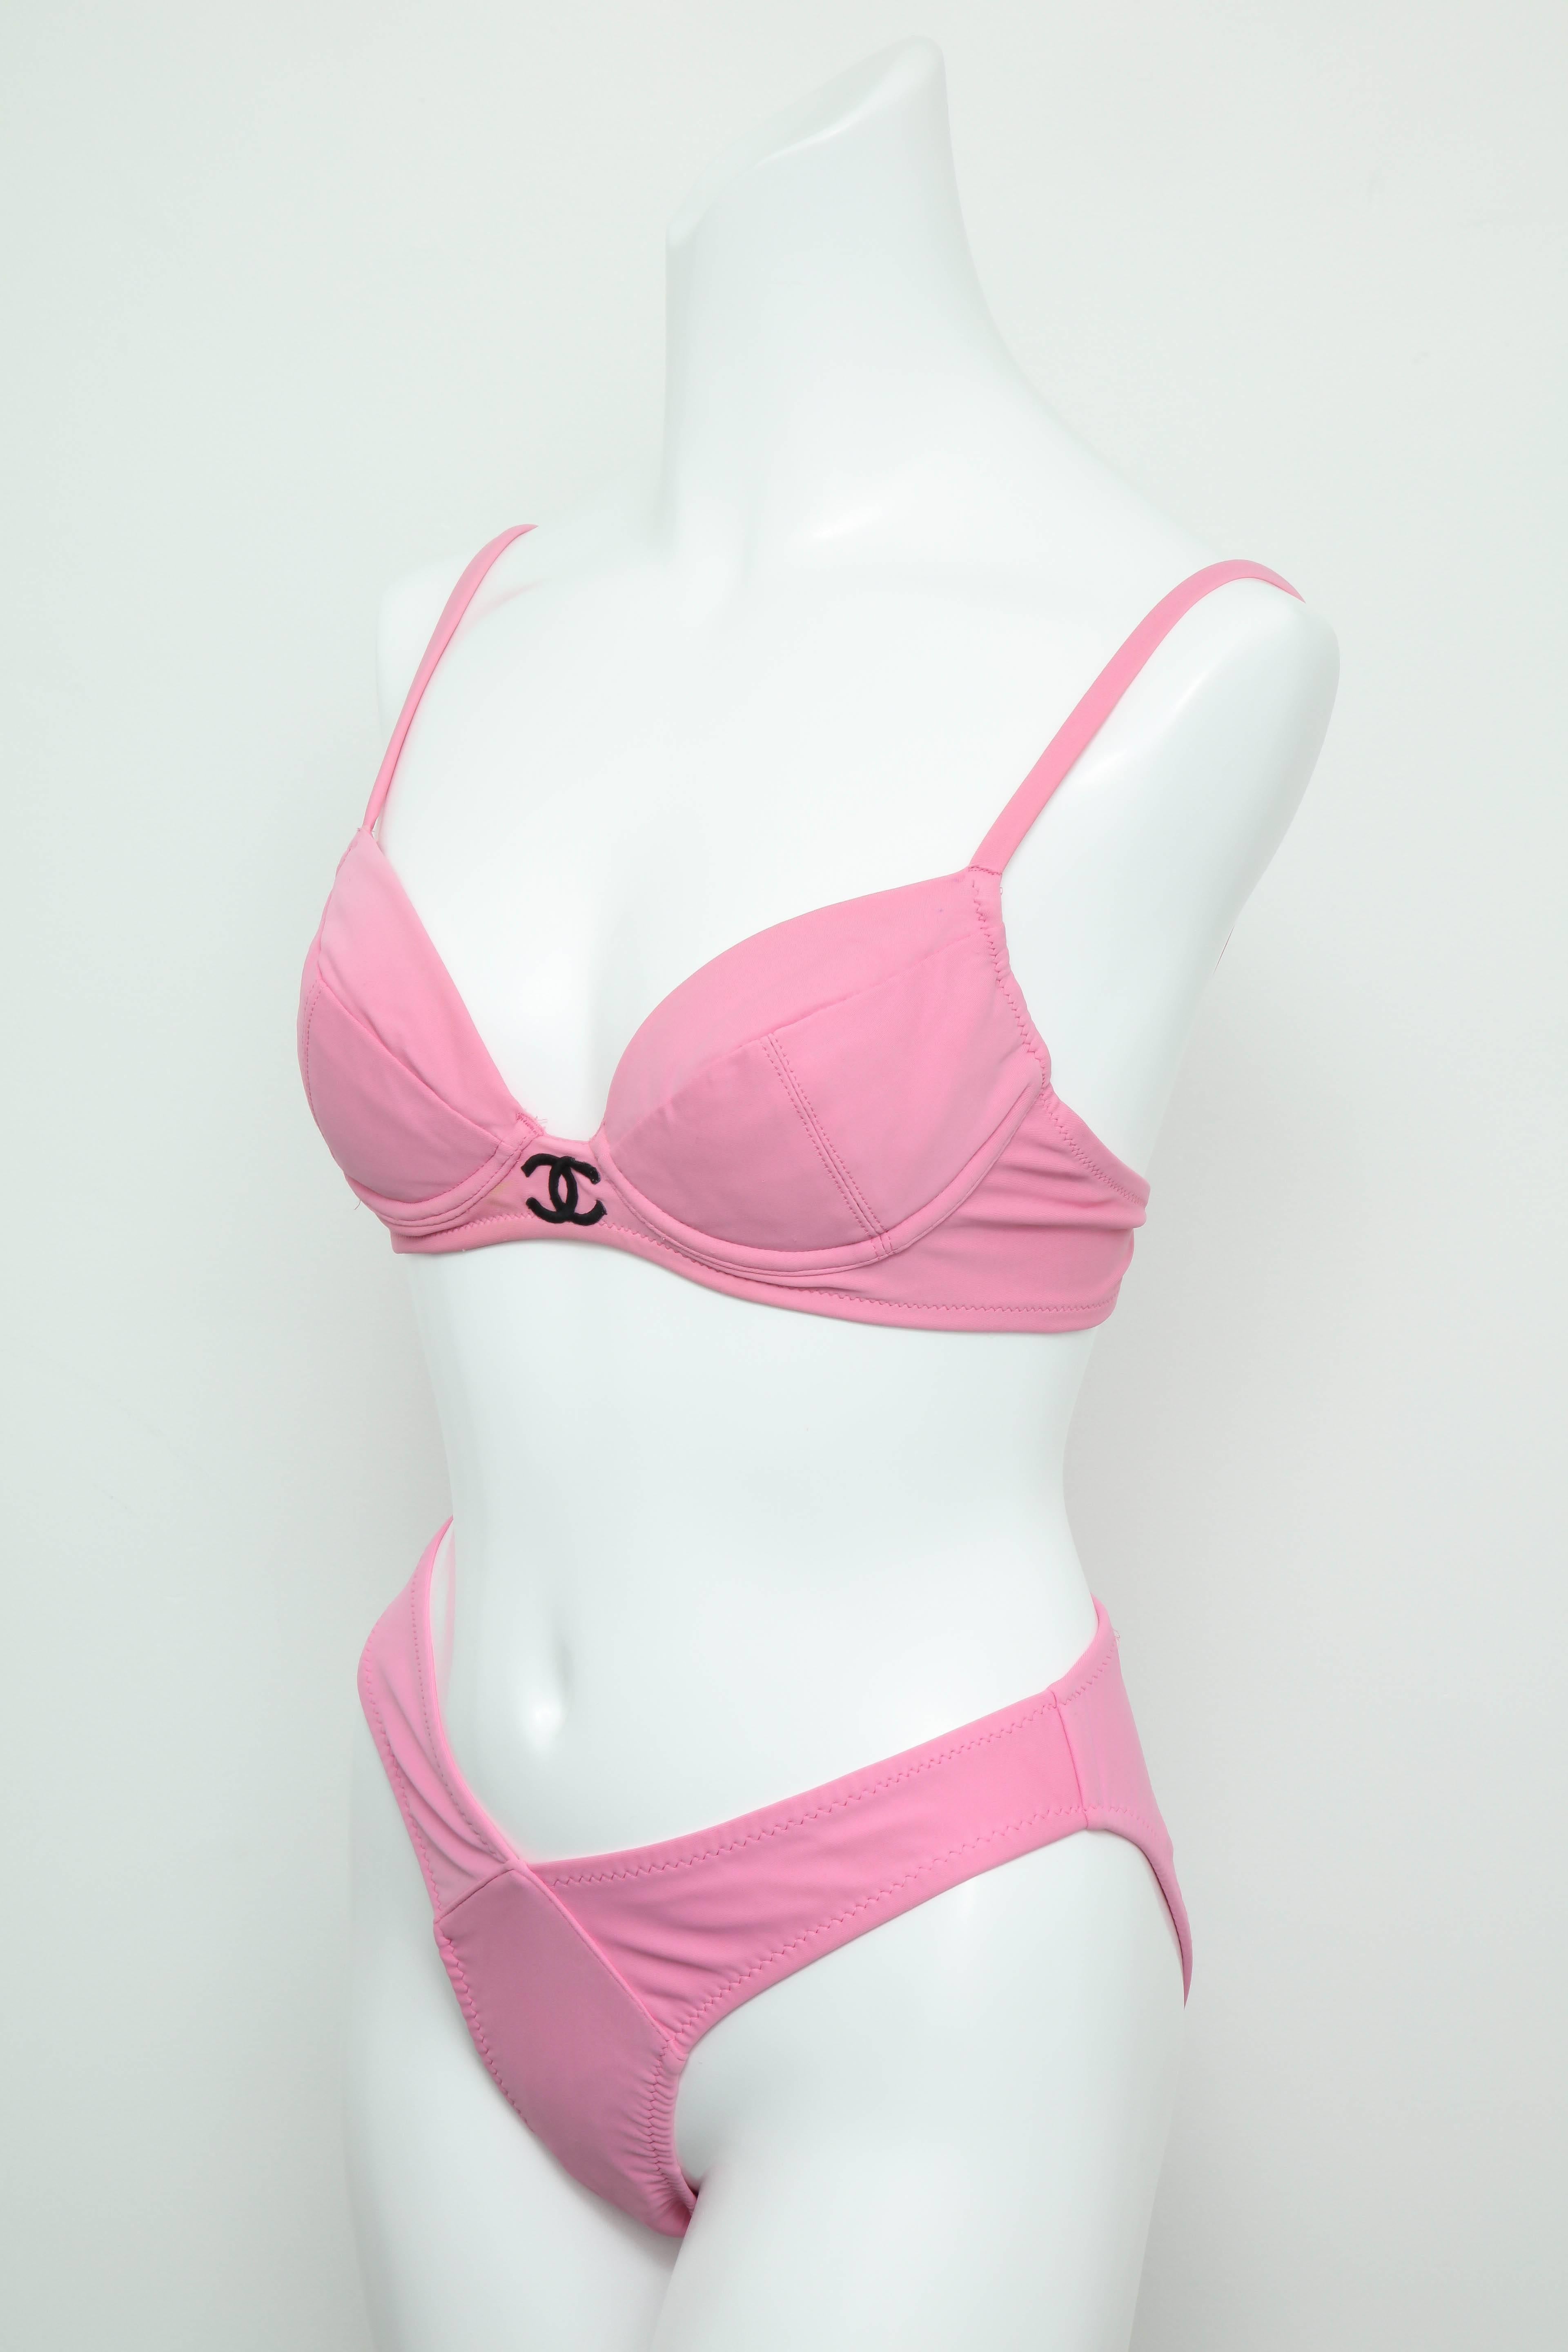 pink chanel bikini